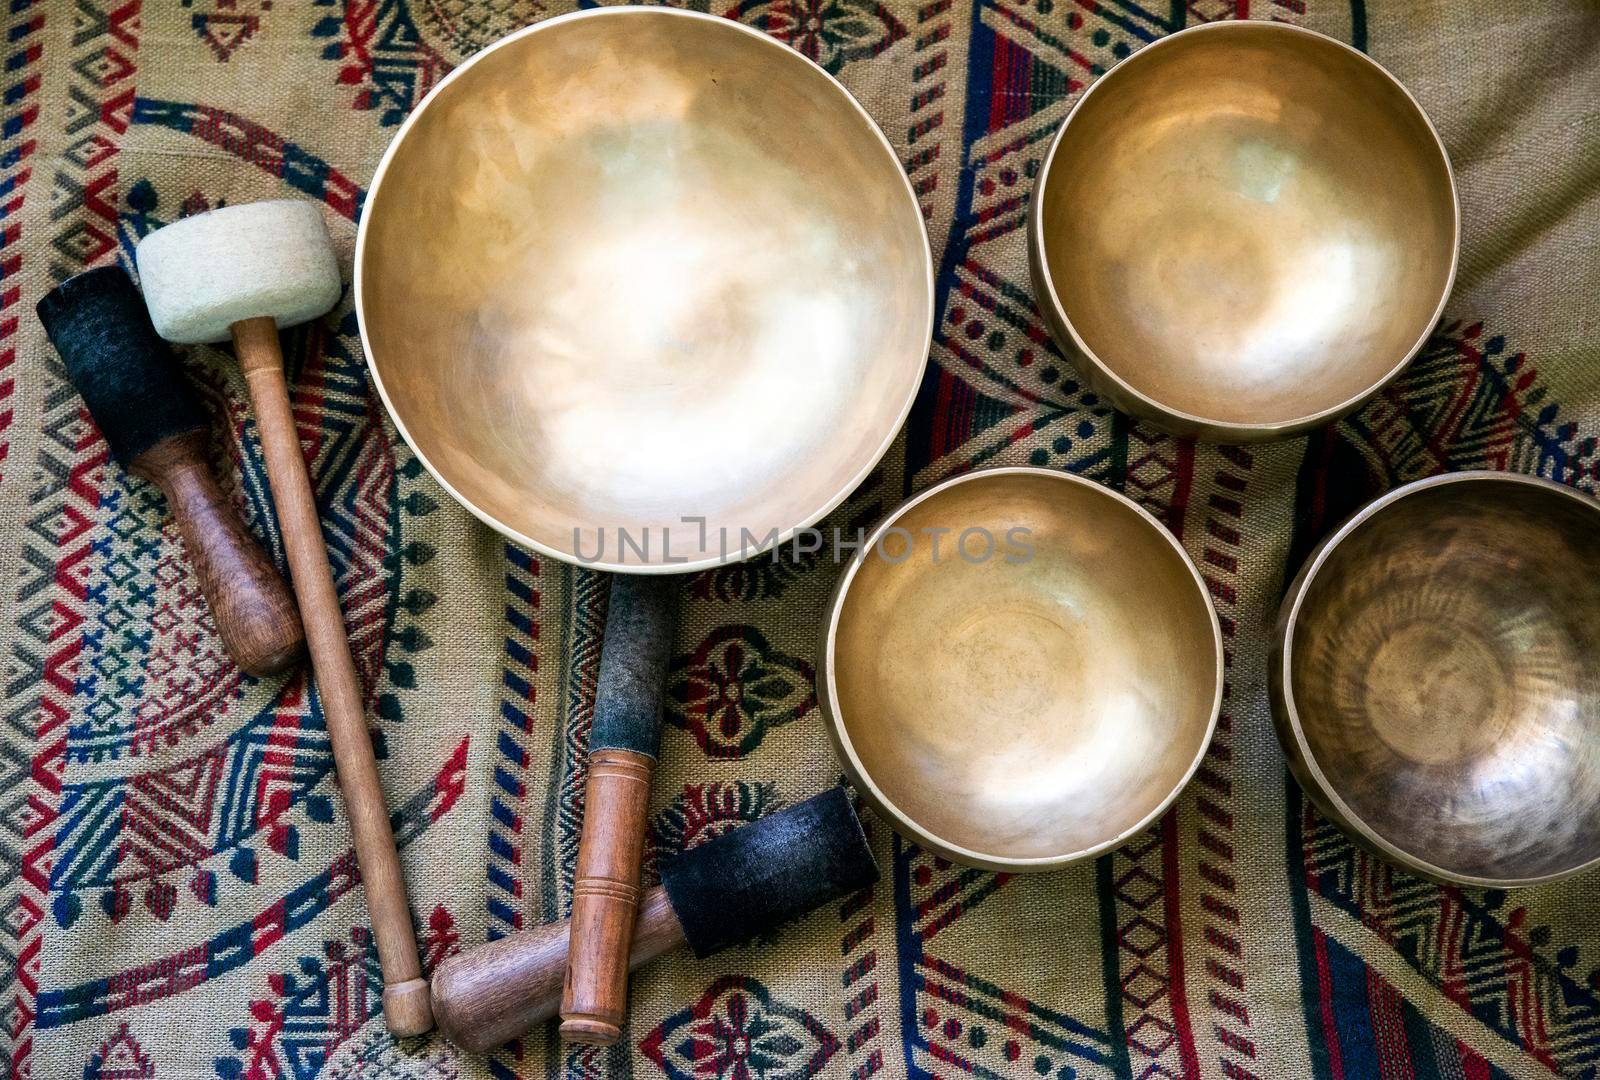 Accessories for a sound massage. Tibetan singing bowls treatment